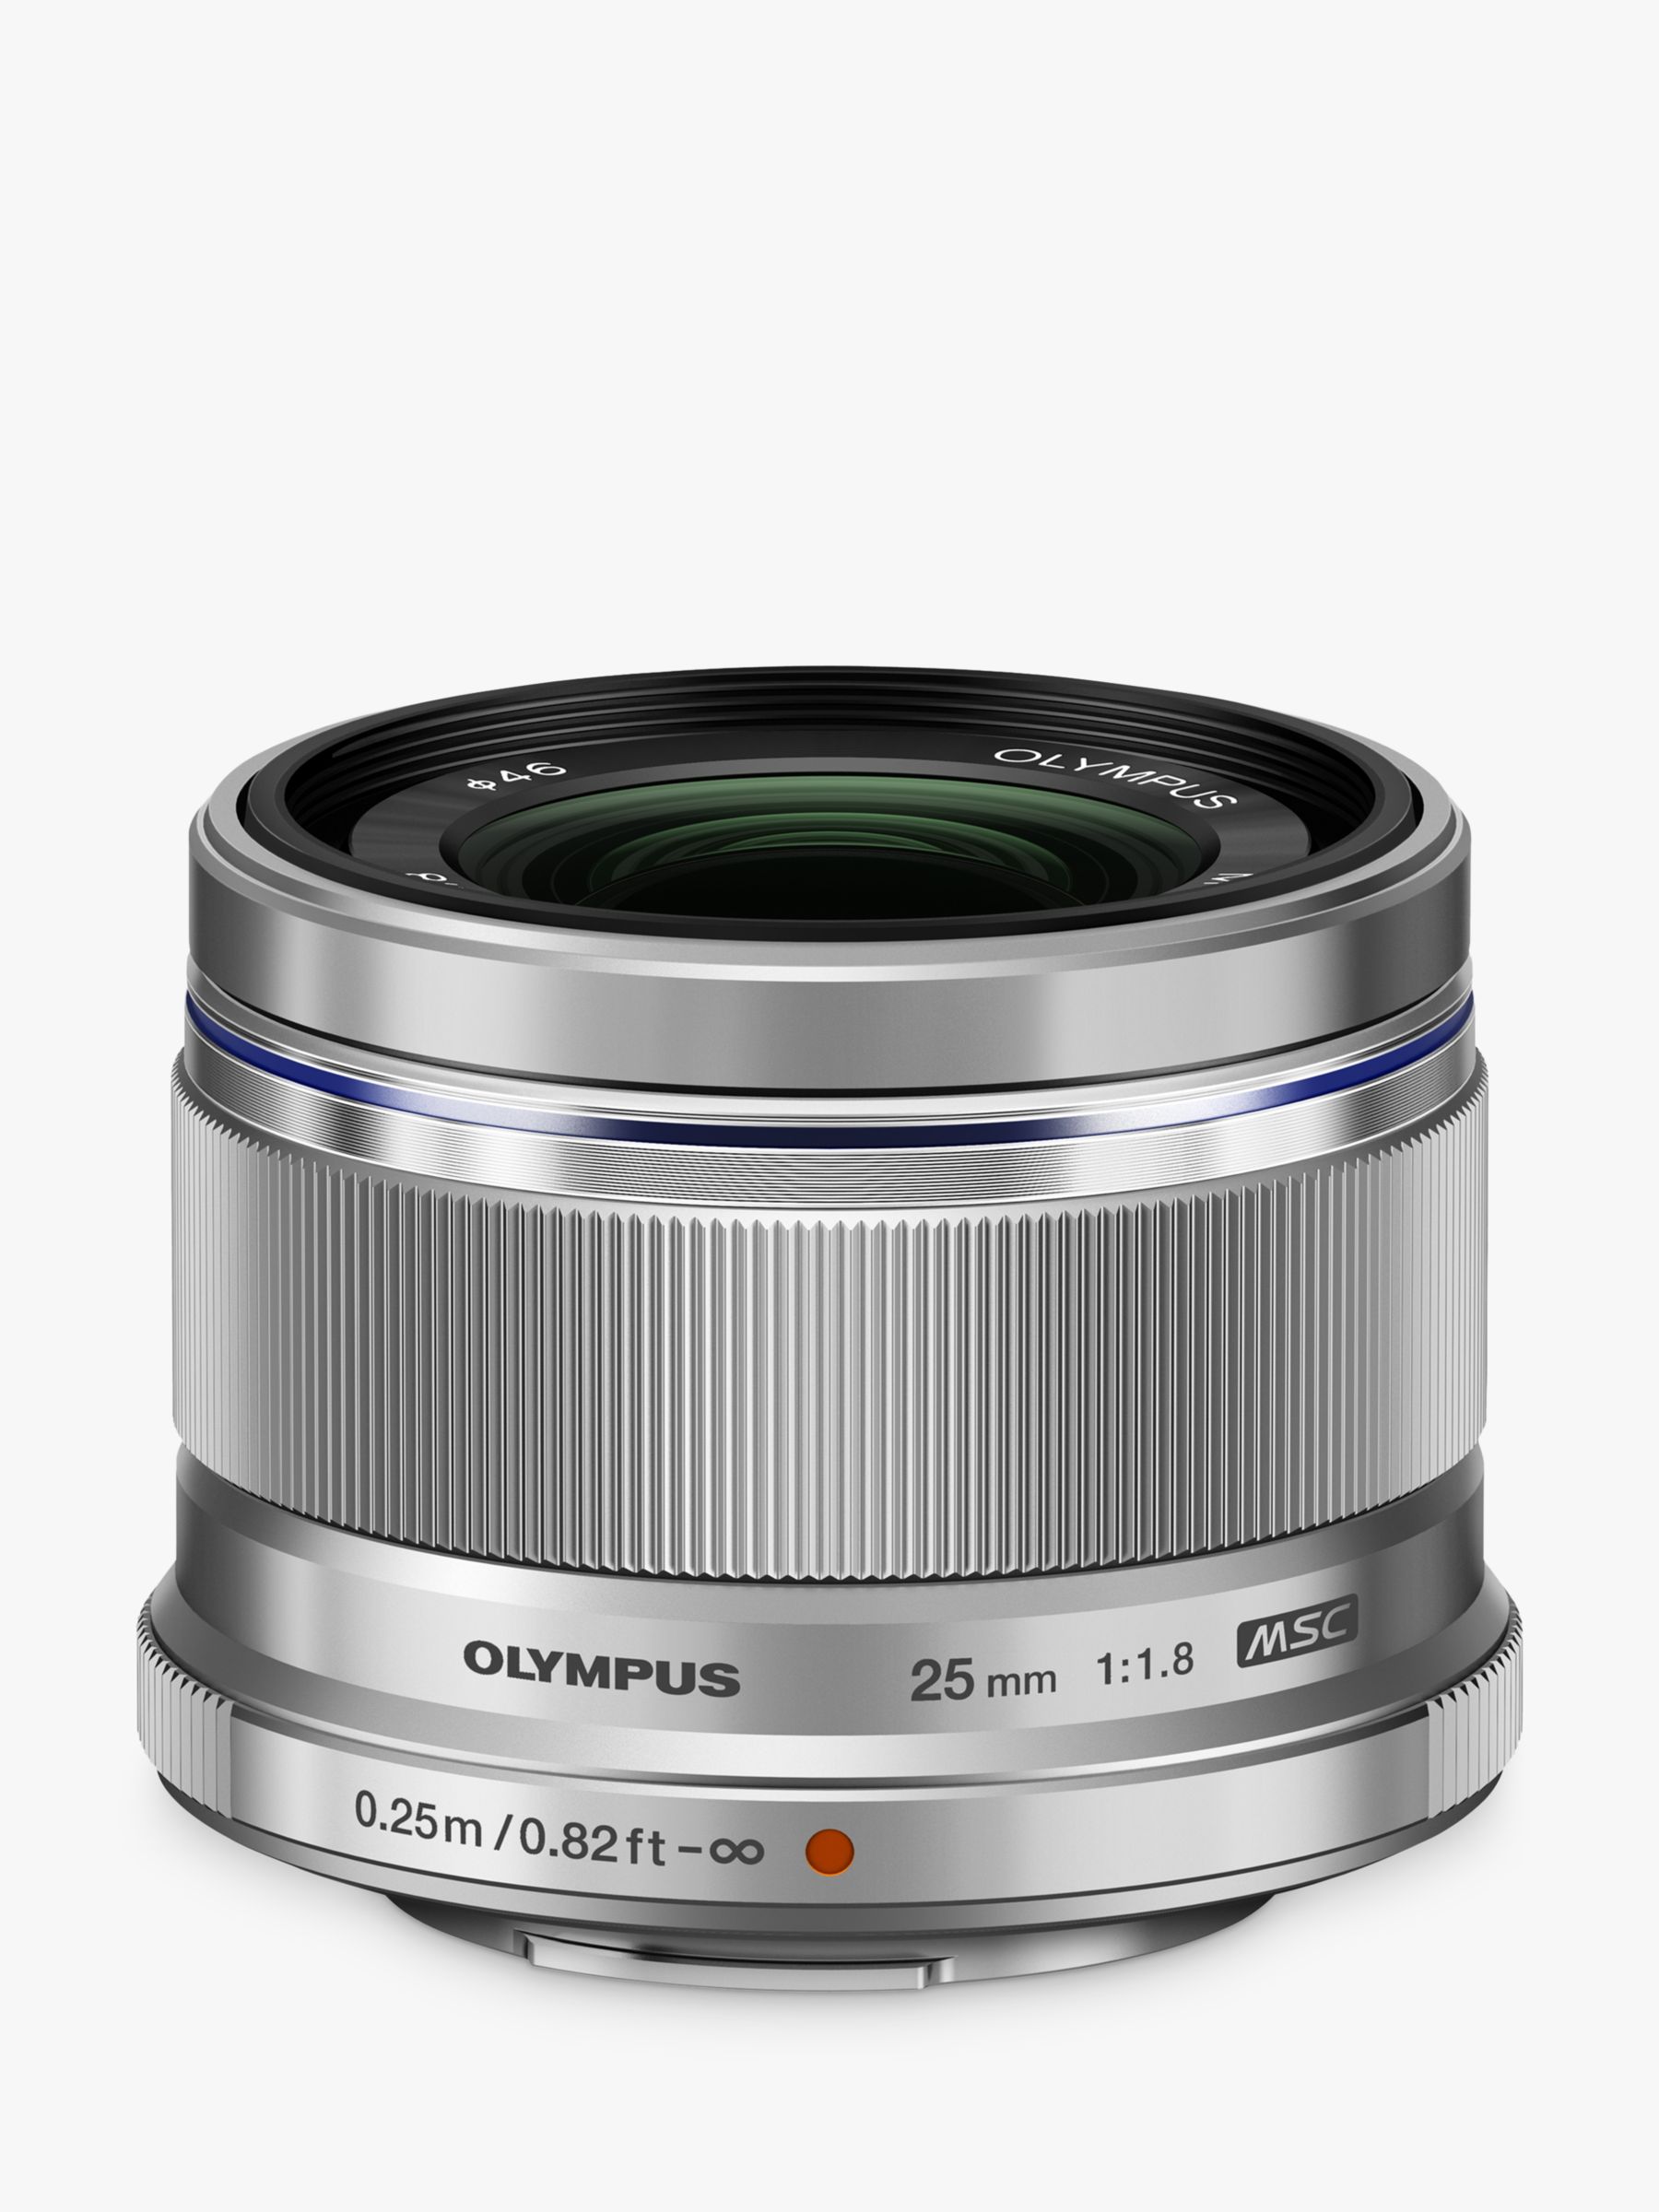 Image of Olympus MZUIKO DIGITAL 25mm f18 Compact Lens with Lens Hood